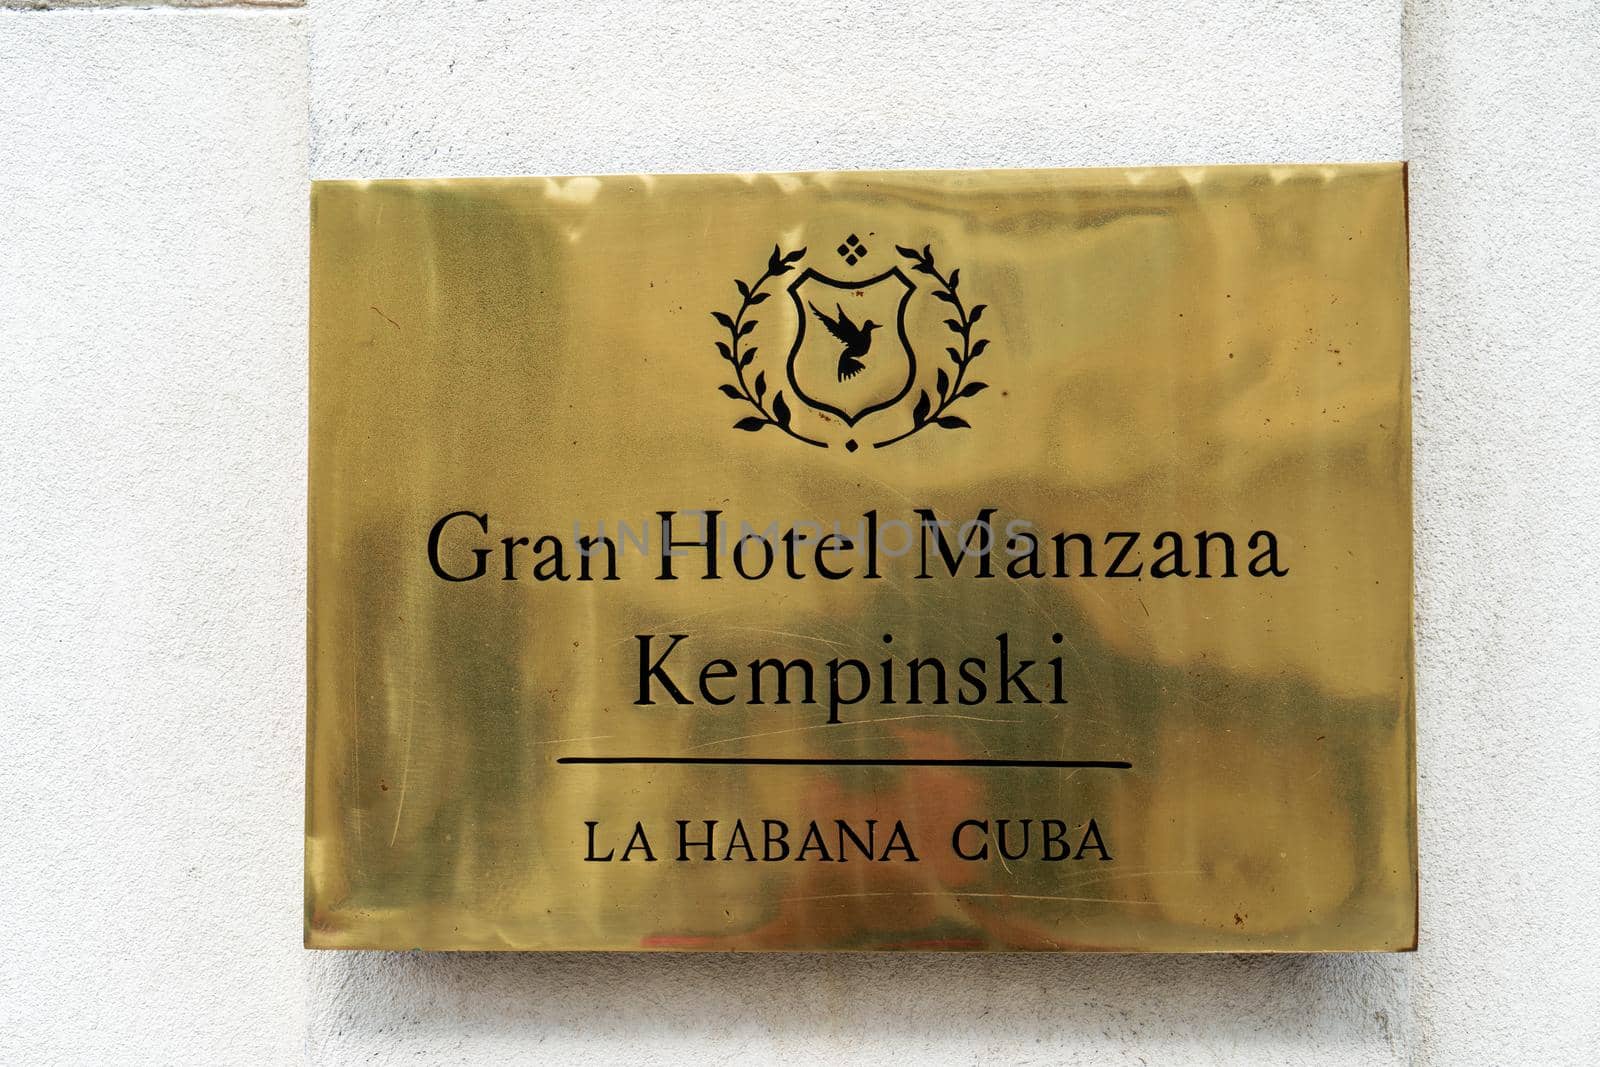 Gran Hotel Manzana Kempinski by jrivalta